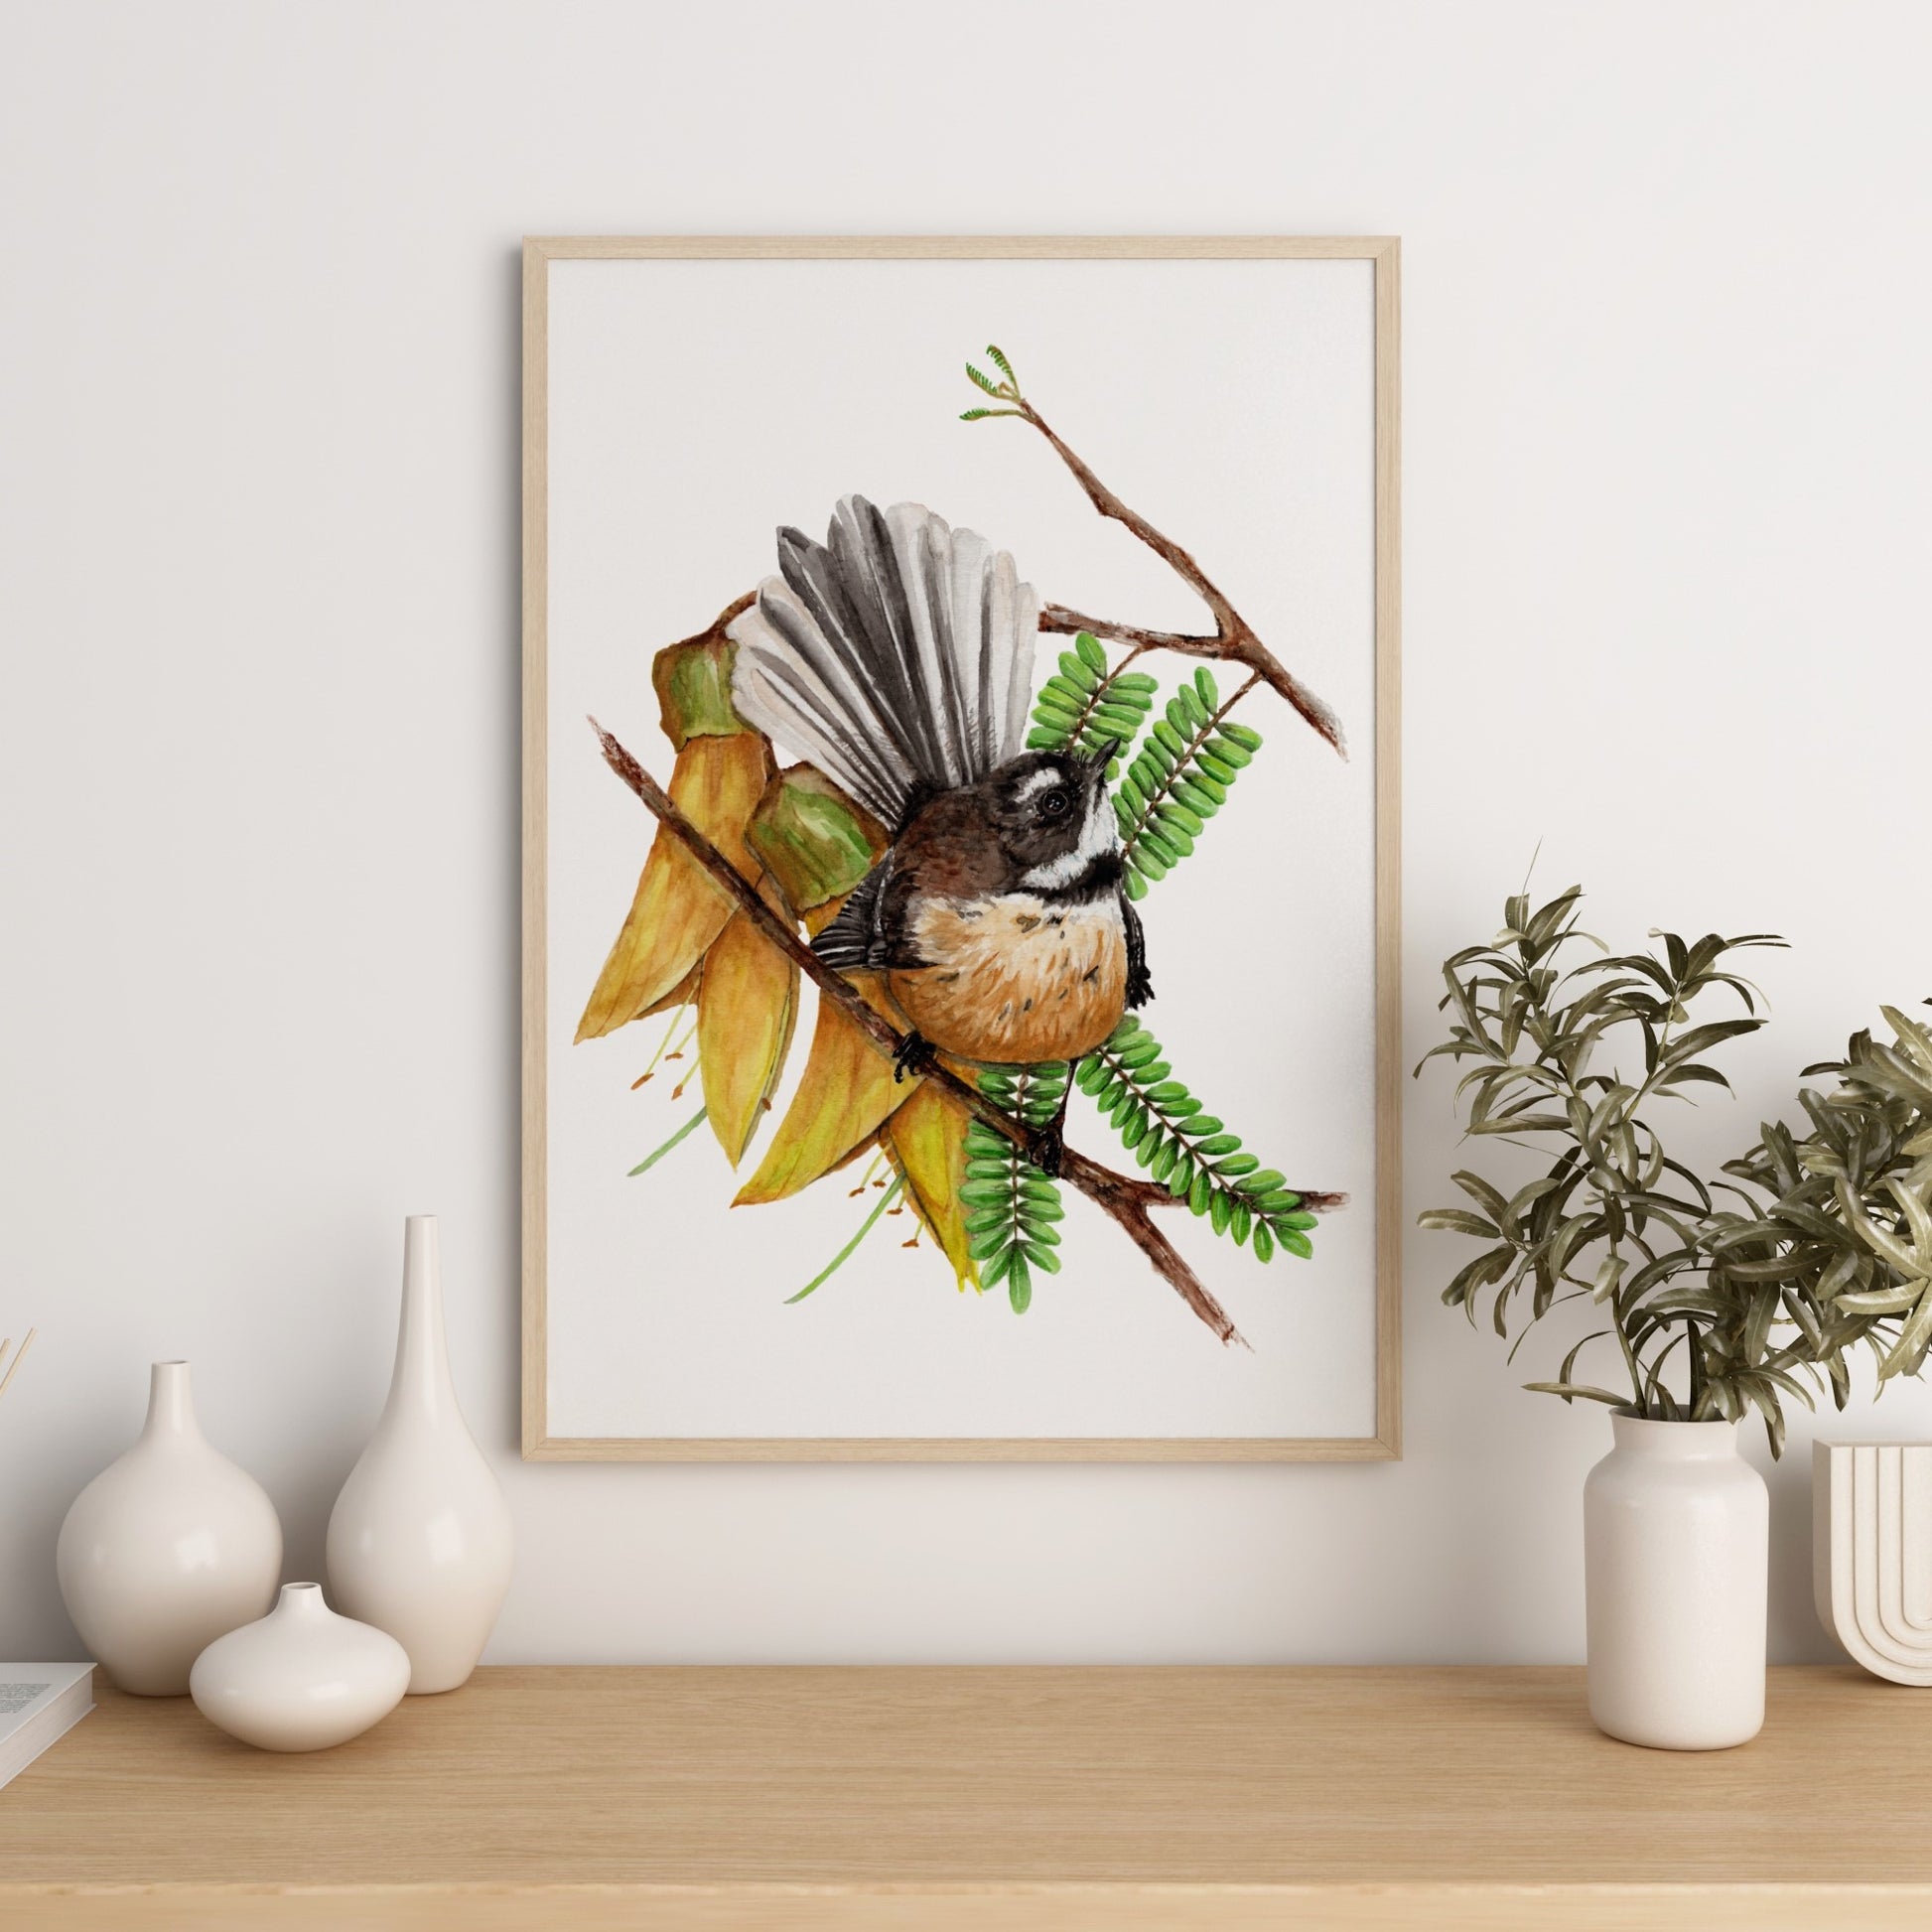 Watercolour artwork featuring a fantail bird perched amongst Kowhai flowers.